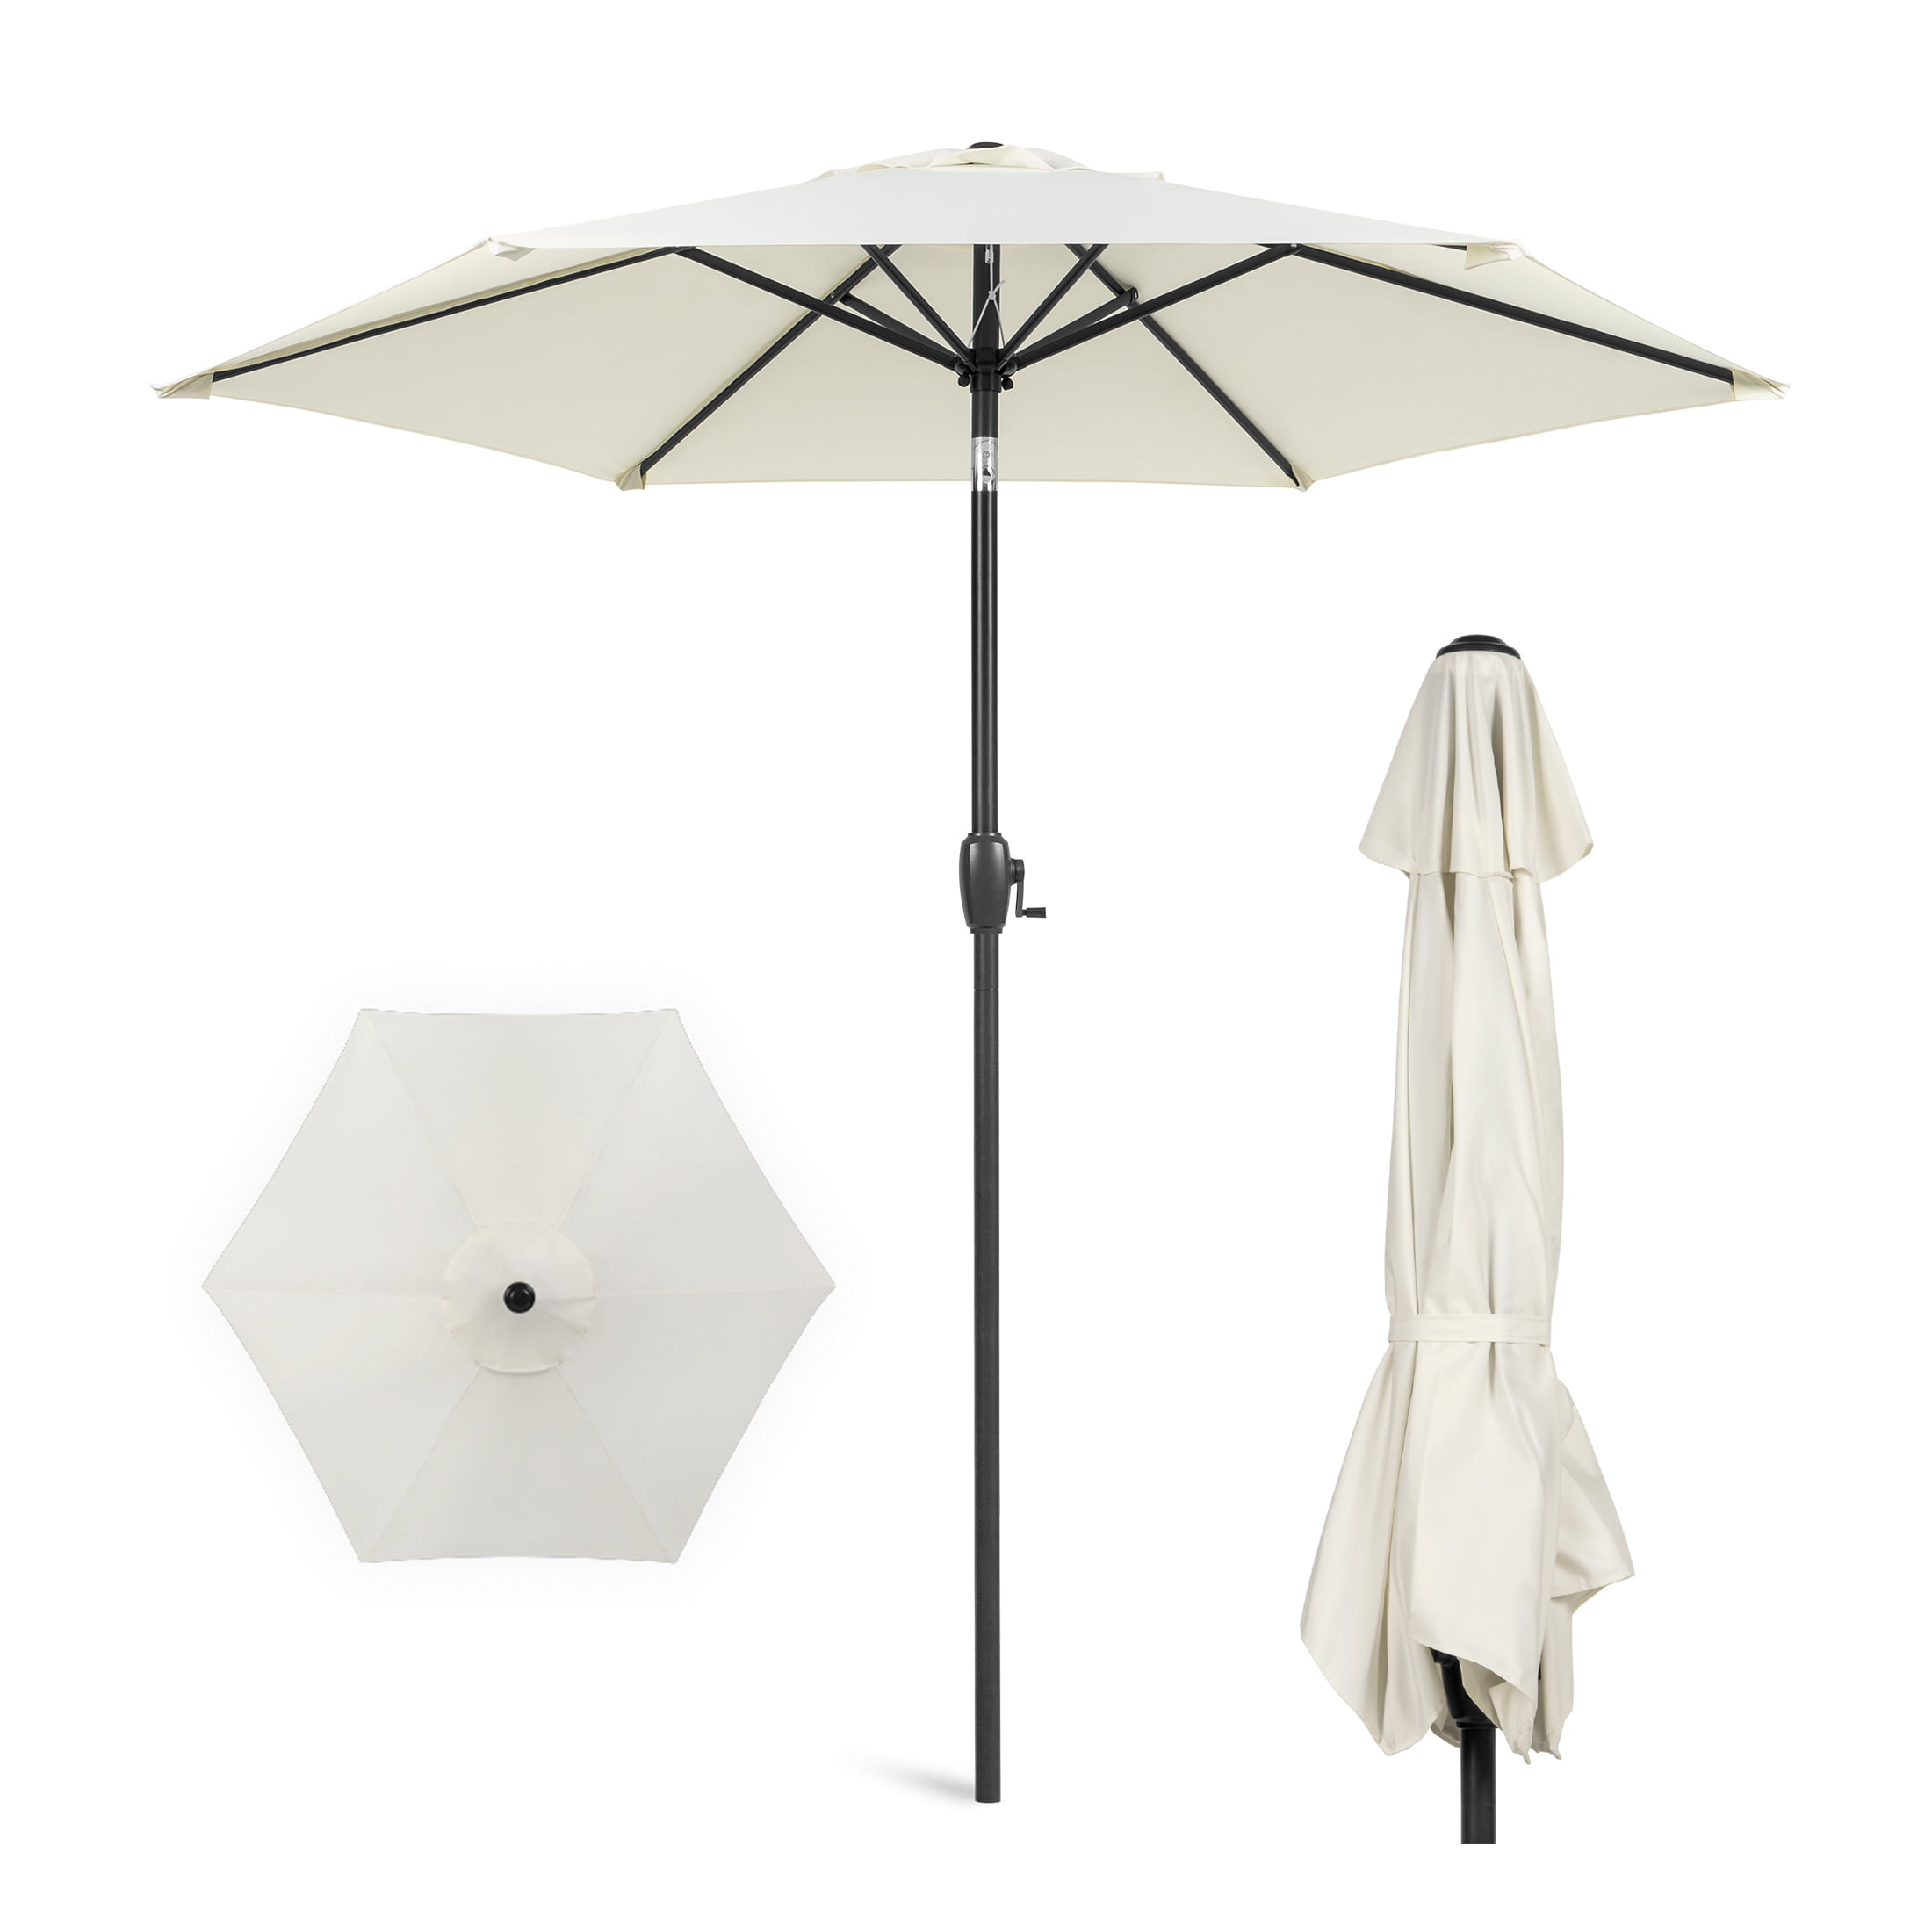 7.5 ft Outdoor Umbrella with 6 Sturdy Ribs Push Button Tilt Crank Table Umbrellas for Yard Garden Deck Backyard Pool KINGYES Patio Umbrella 7.5 Ft, Beige 